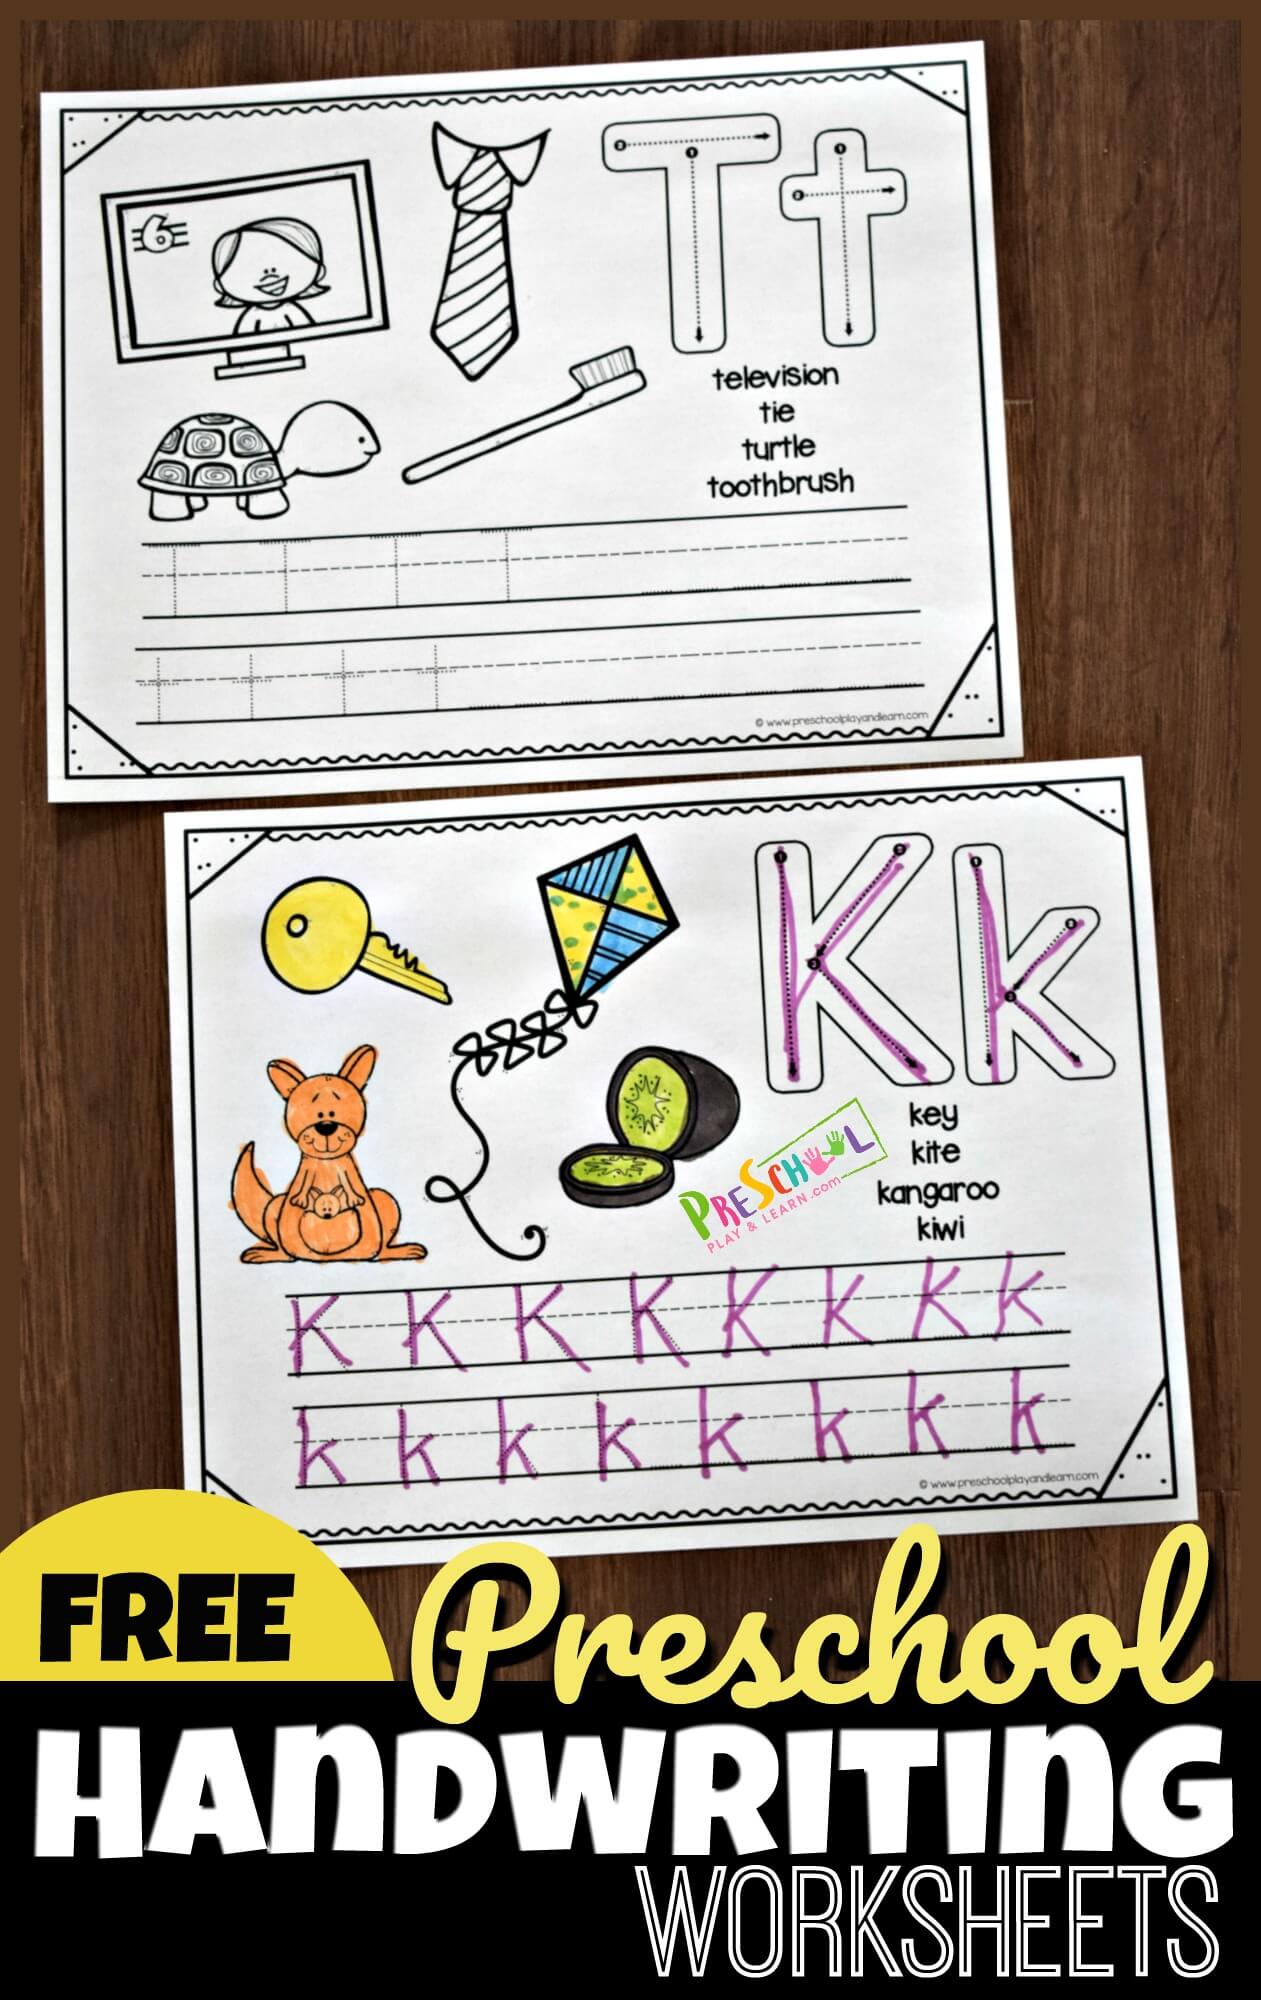 Letter S Handwriting Practice Worksheet - Have Fun Teaching